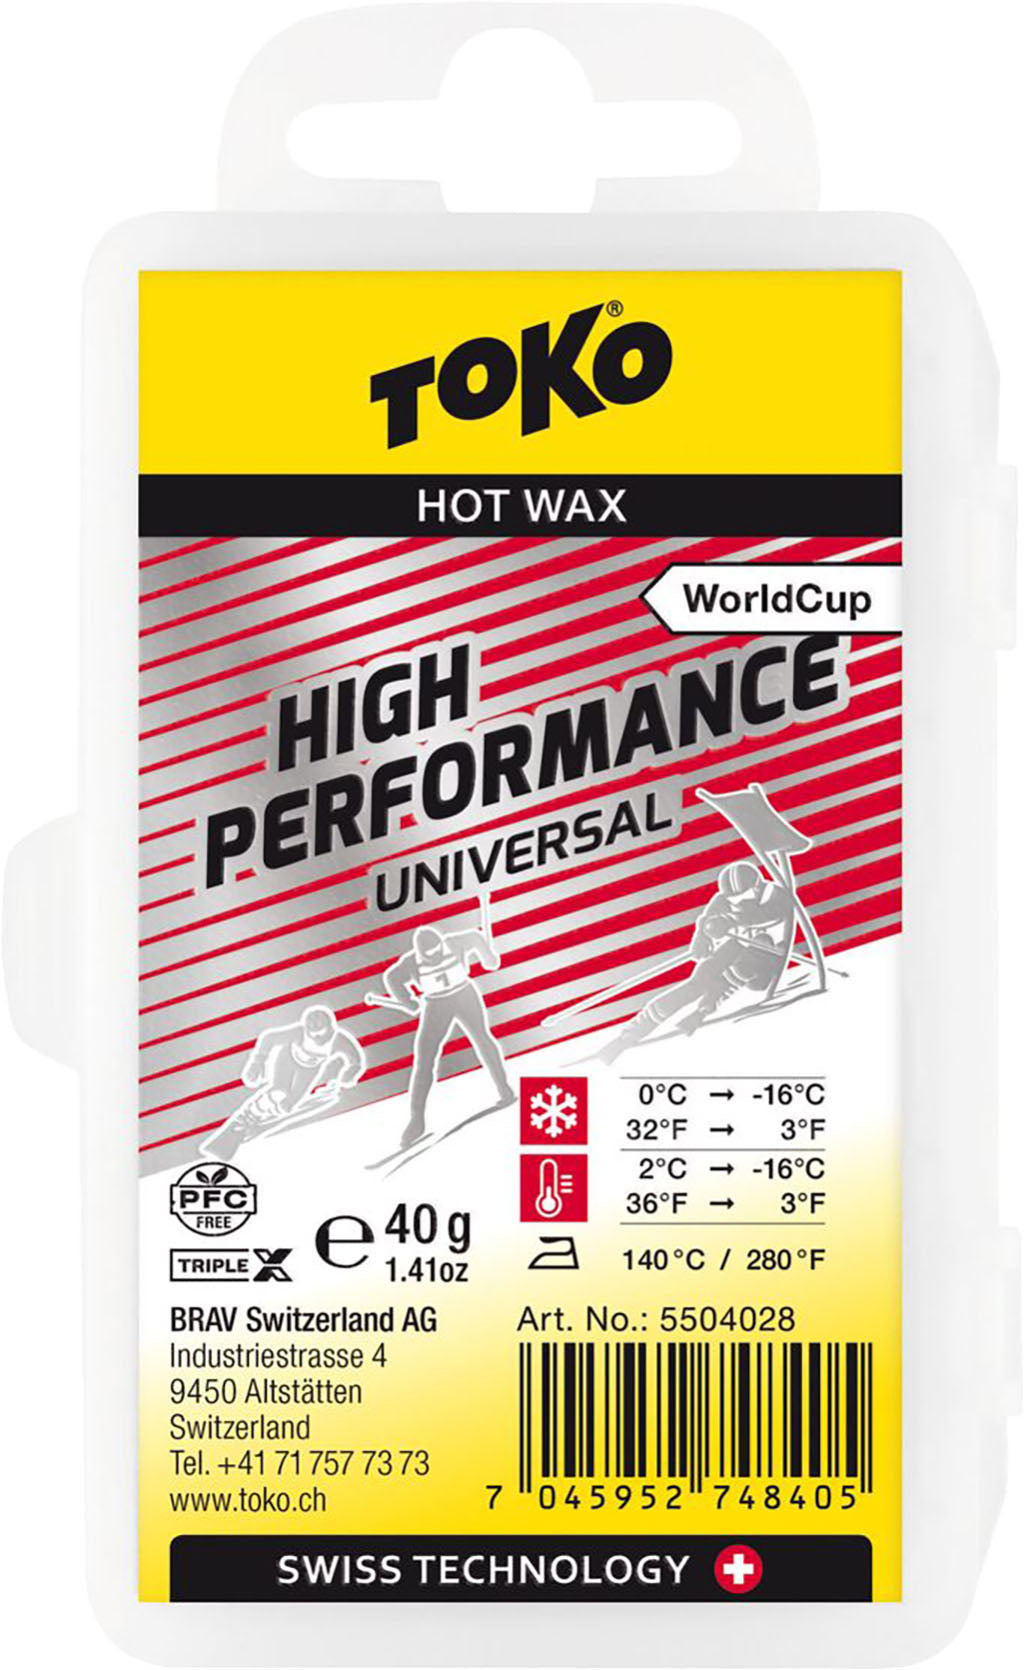 Toko High Performance Universal 40G Wax | Altitude Sports